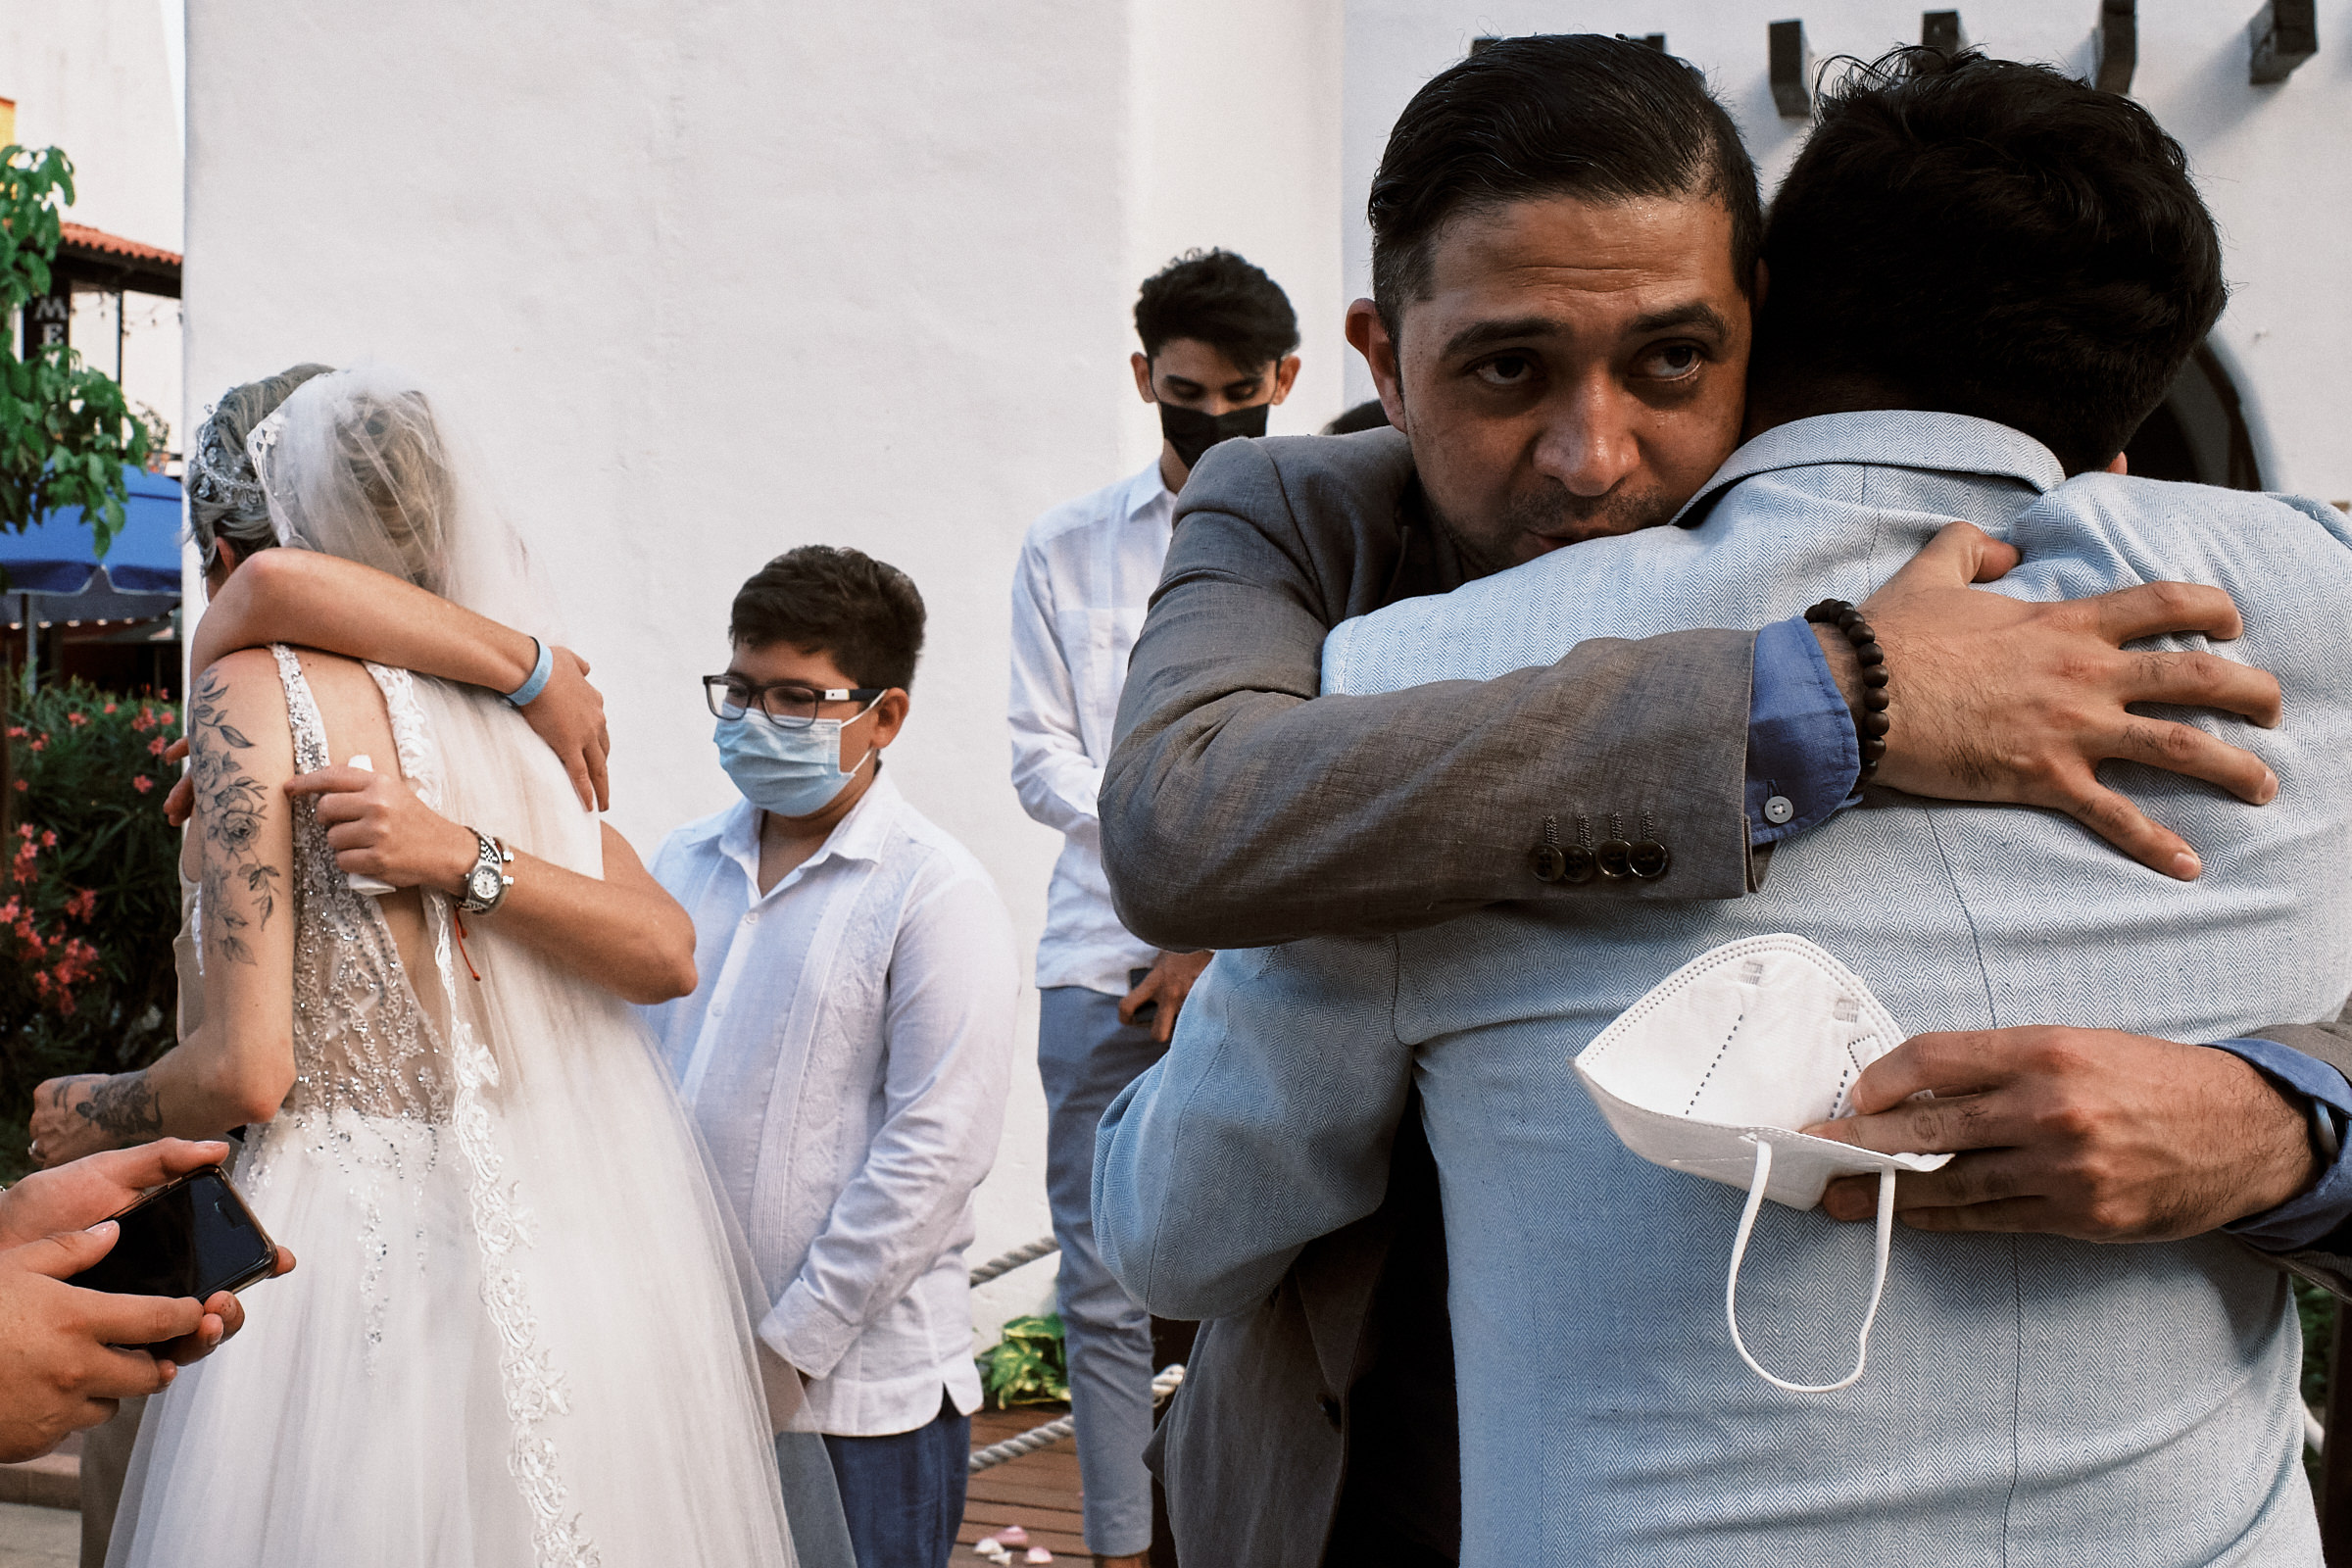 Guests Hug Bride And Groom After Catholic Wedding Ceremony In Playa Del Carmen